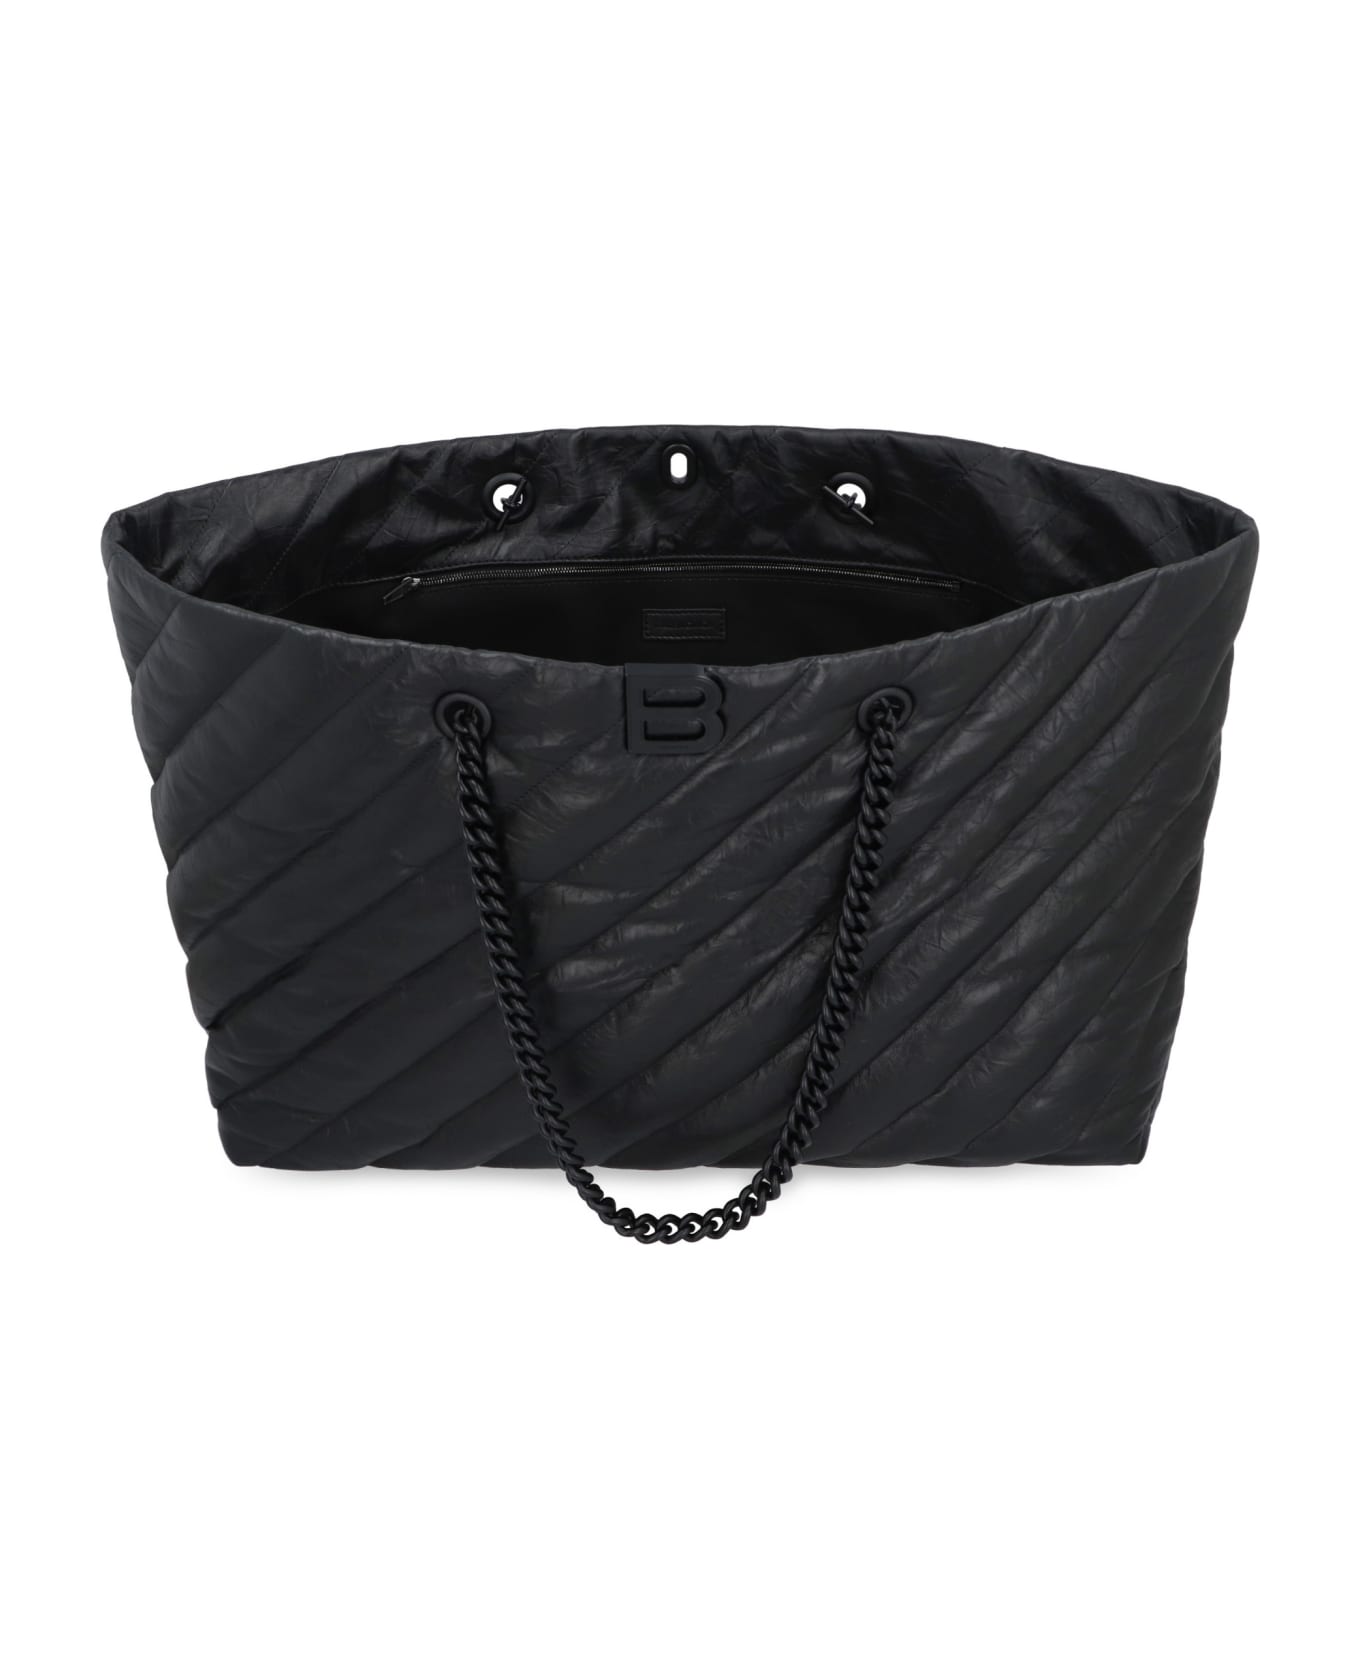 Balenciaga Carry All Crush Leather Tote - black